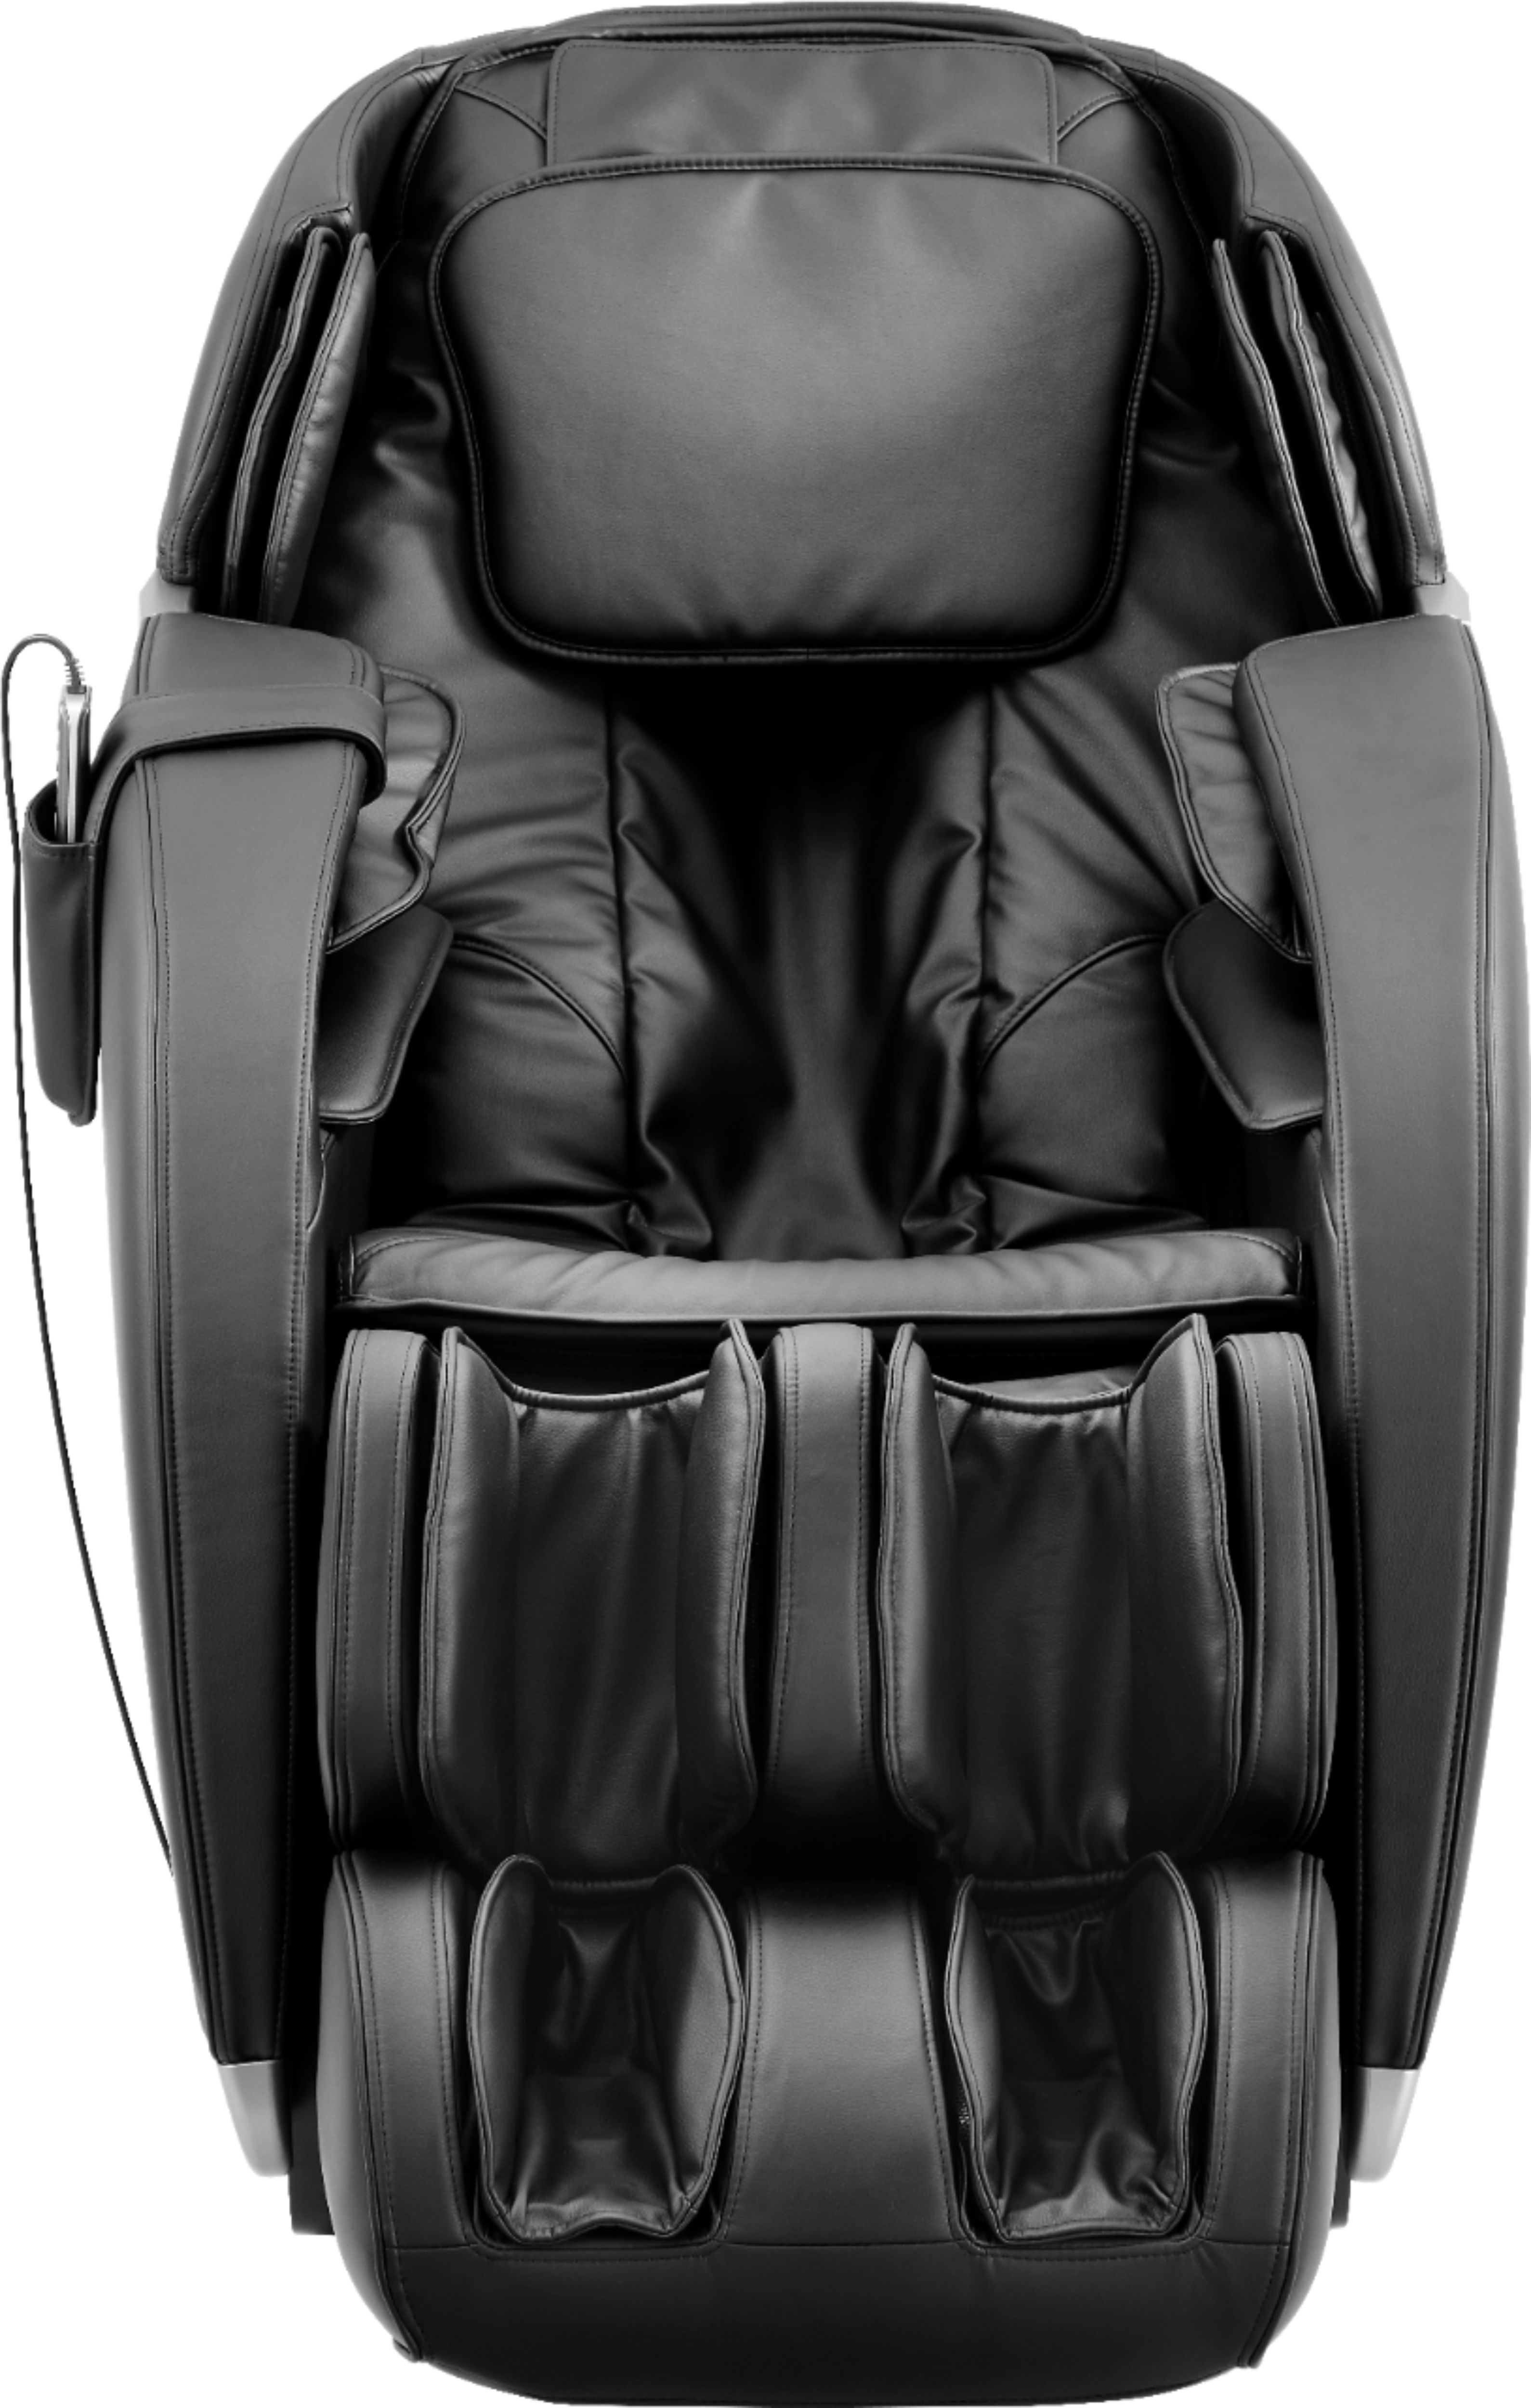 Angle View: Insignia™ - 2D Zero Gravity Full Body Massage Chair - Black with silver trim